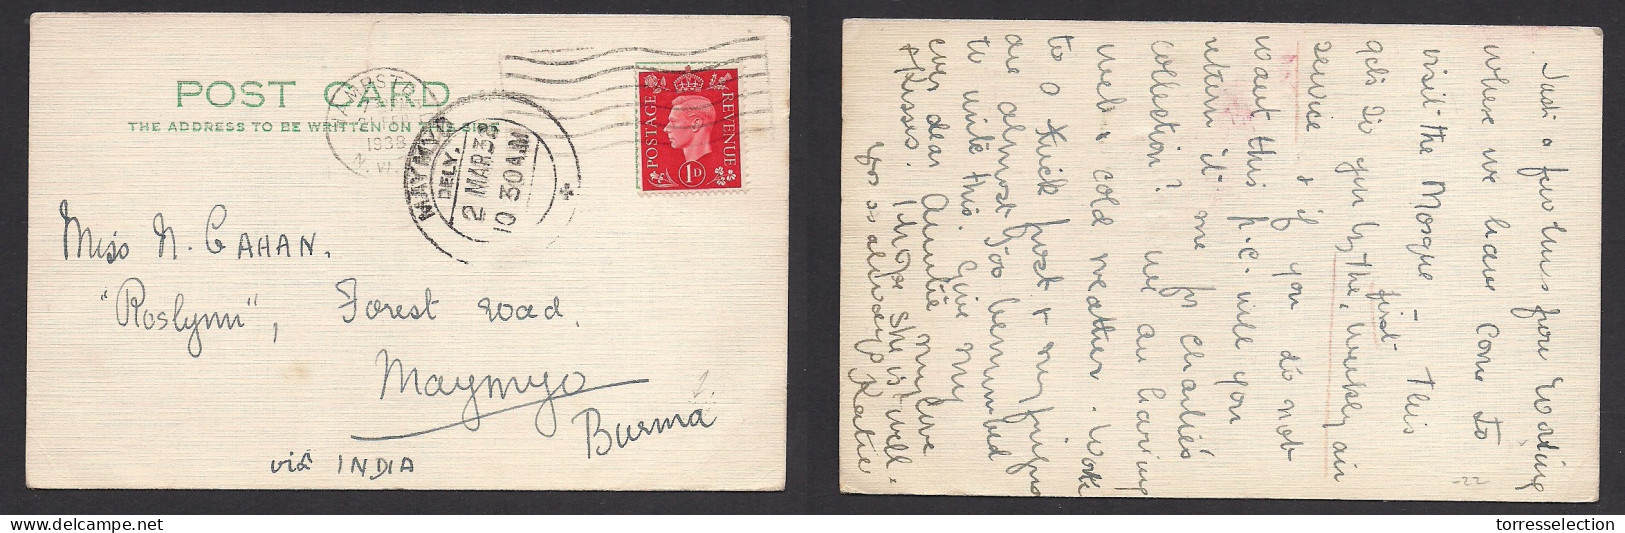 Great Britain - XX. 1938 (21 Febr) Hampstead - Burma, MayMyo (2 March) Via India. 1d Red Private Comercial Fkd Card. XSA - ...-1840 Préphilatélie